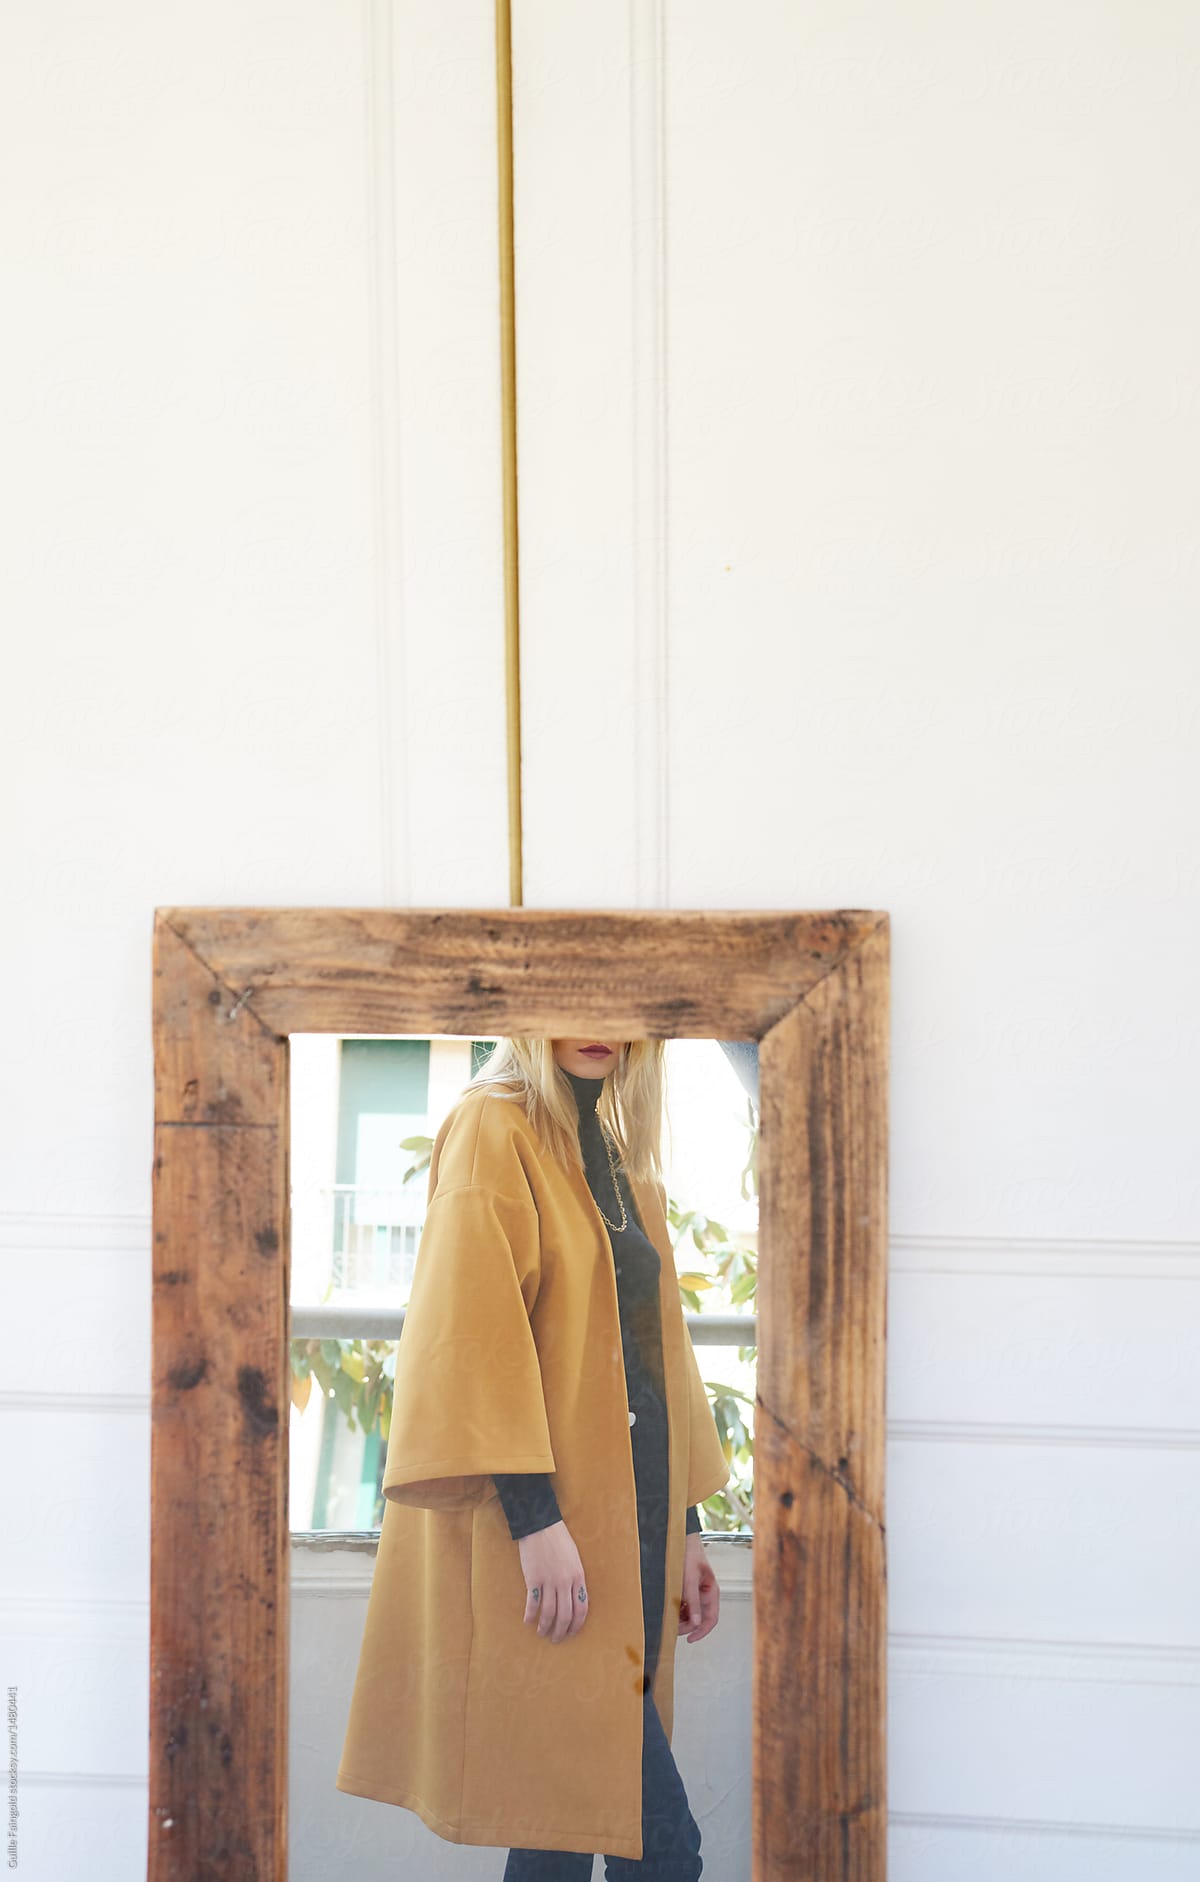 Girl in yellow coat reflecting in mirror